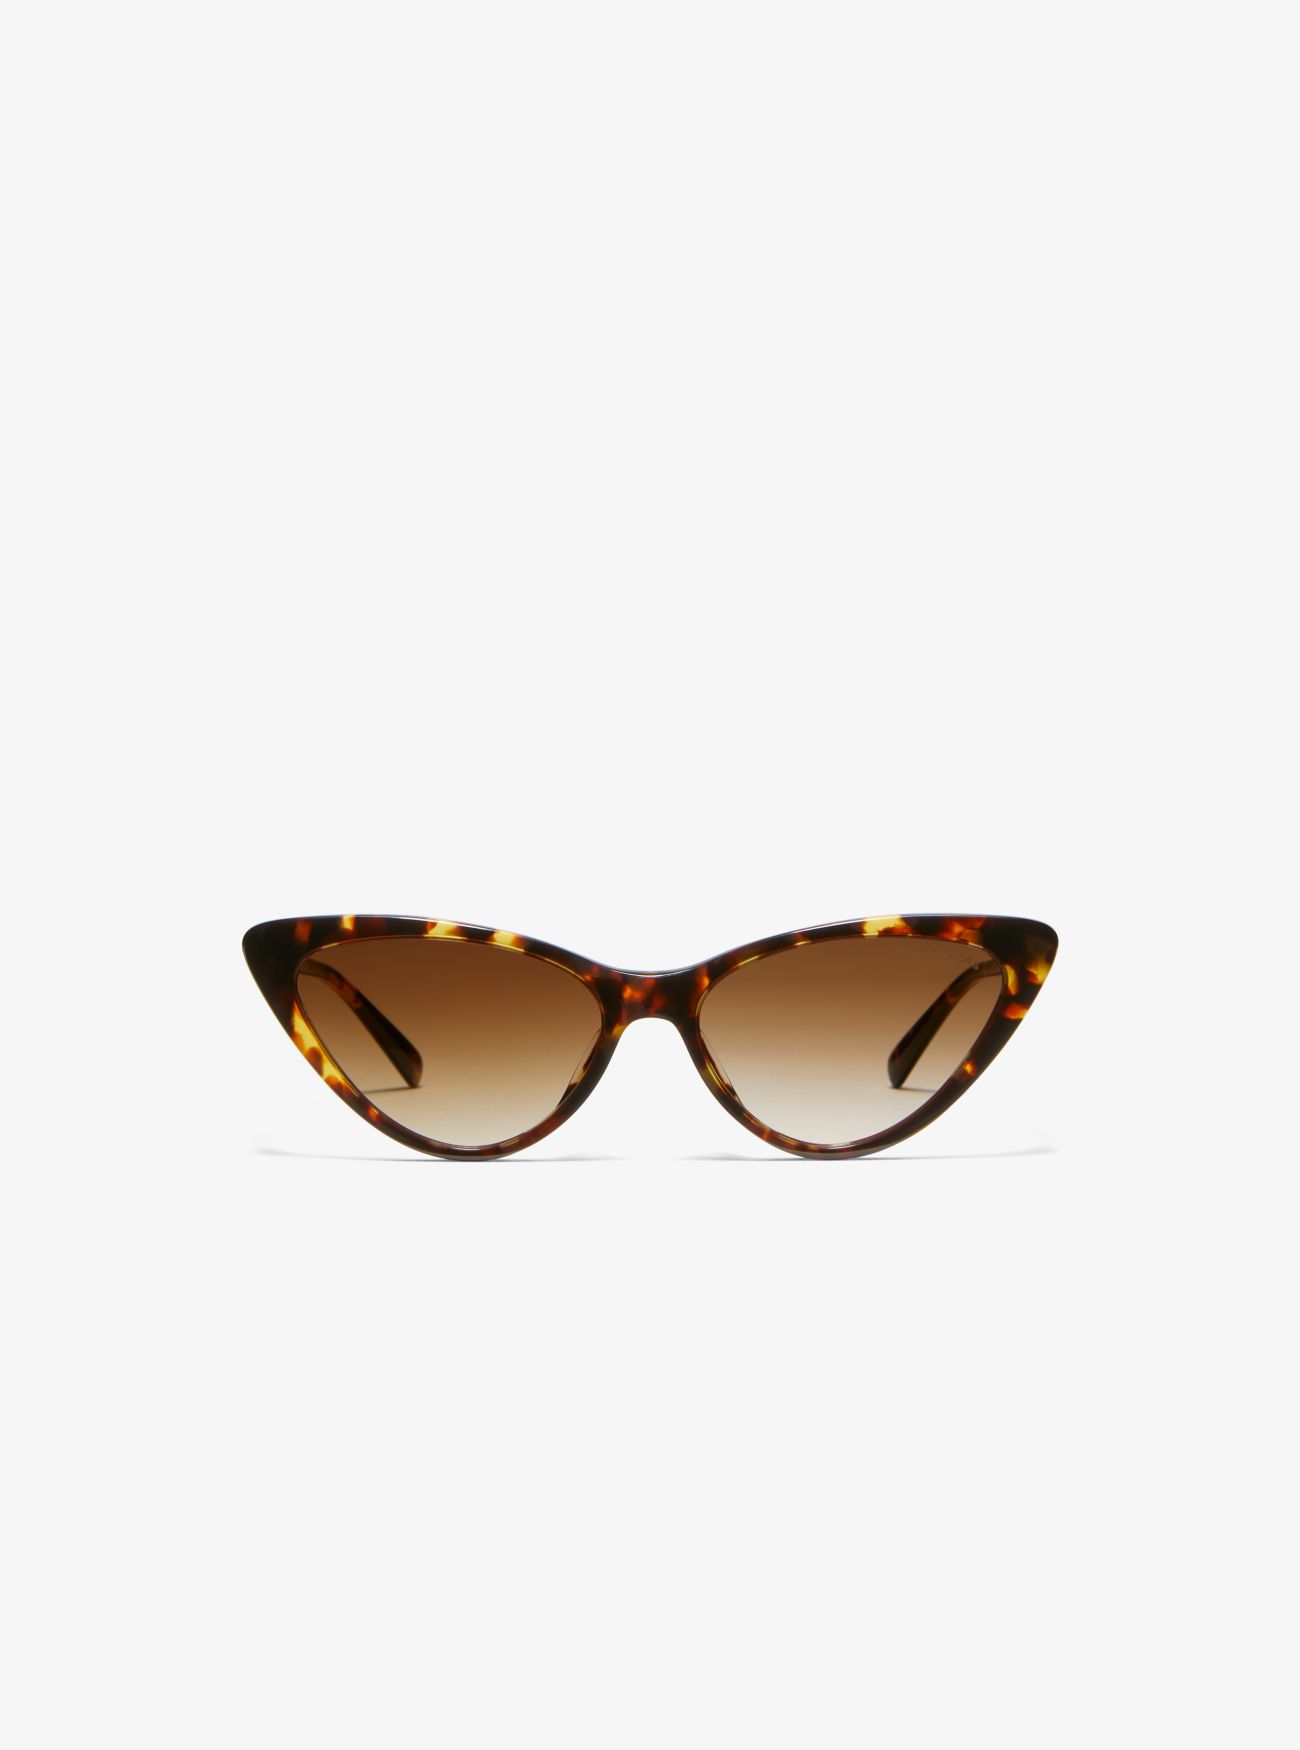 MK Harbour Island Sunglasses - Brown - Michael Kors